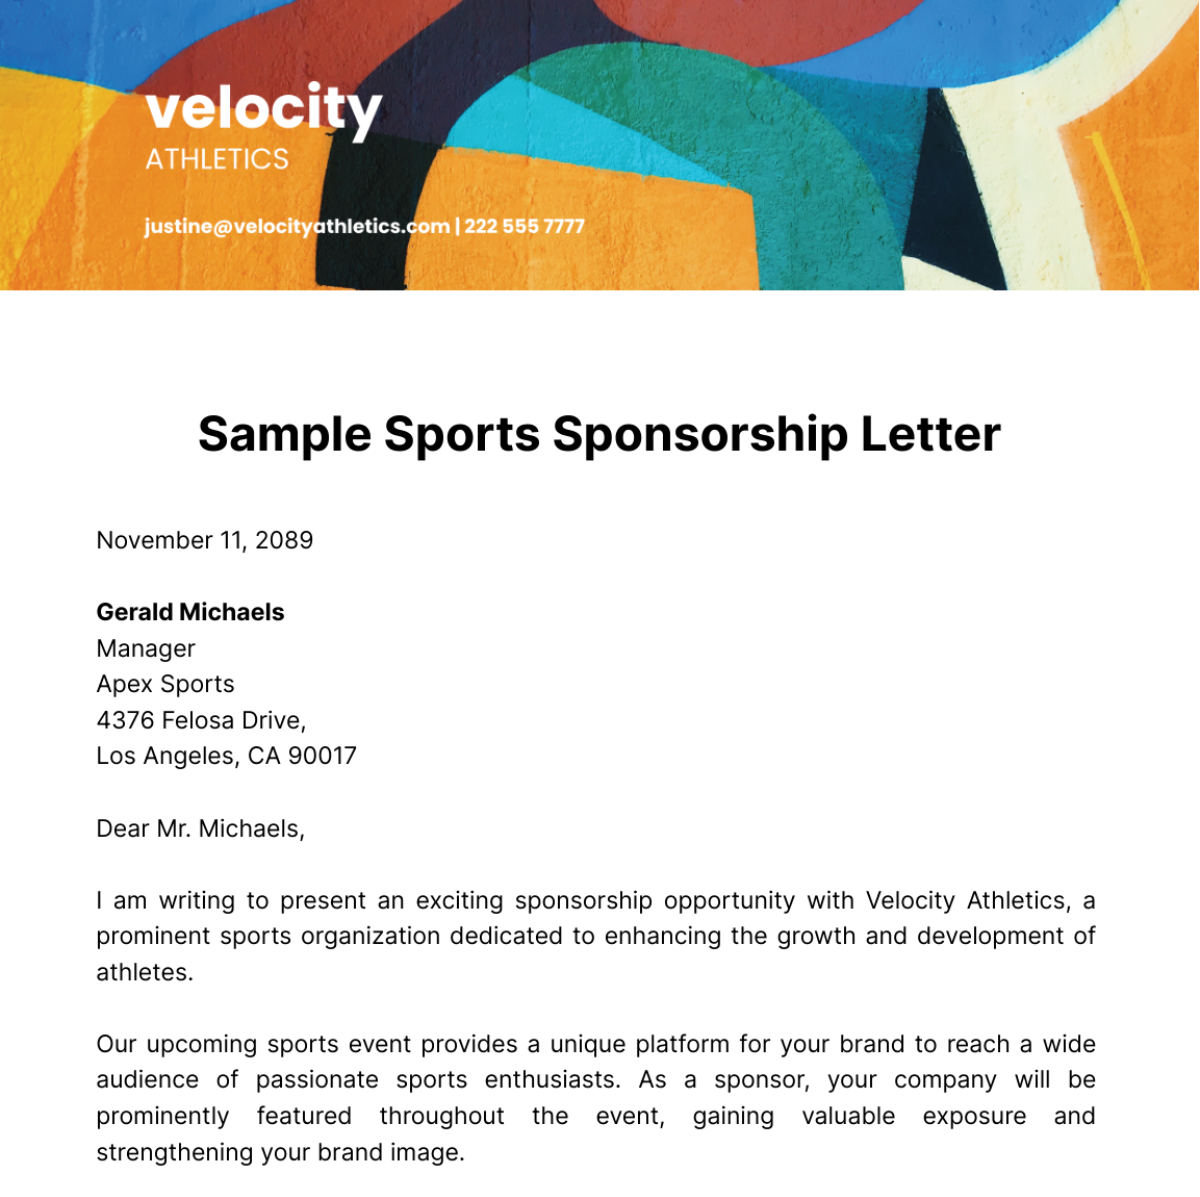 Sample Sports Sponsorship Letter Template